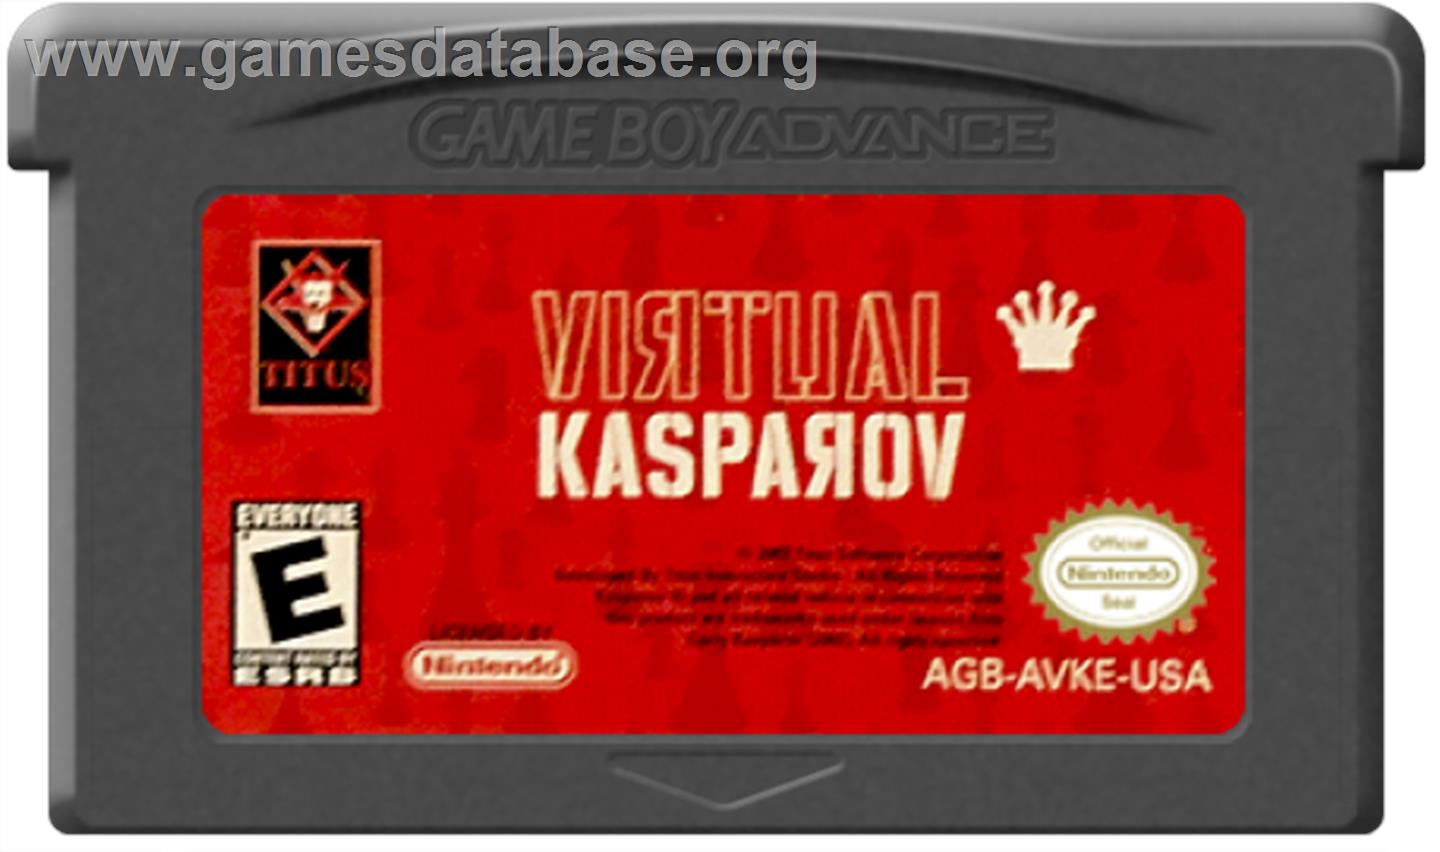 Virtual Kasparov - Nintendo Game Boy Advance - Artwork - Cartridge